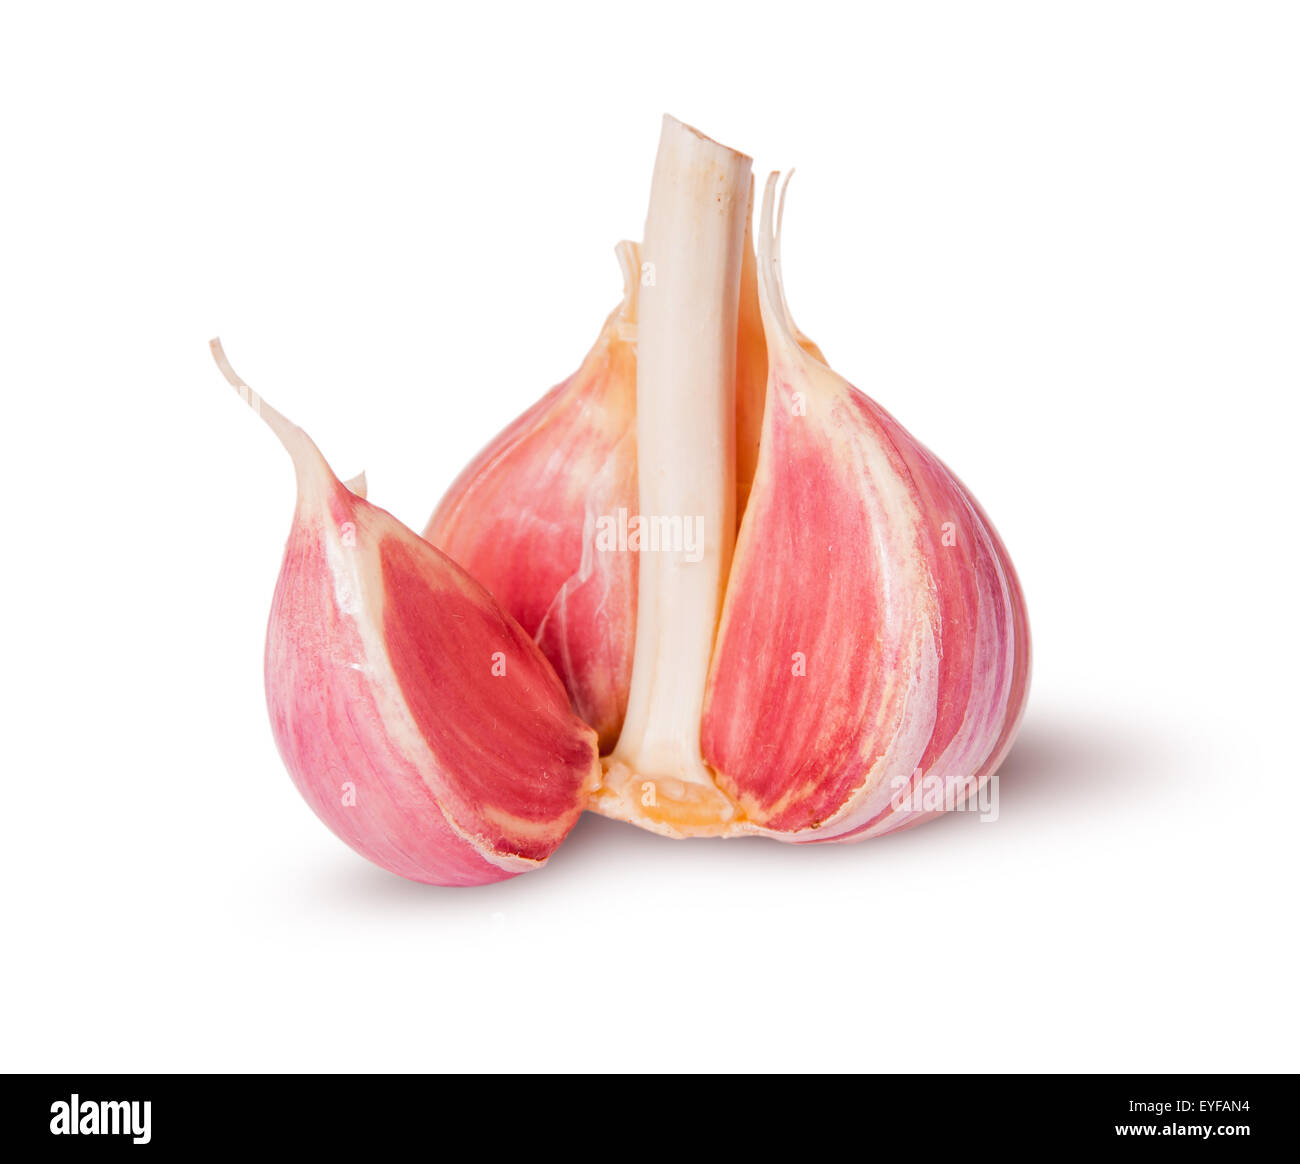 Young fresh garlic isolated on white background Stock Photo